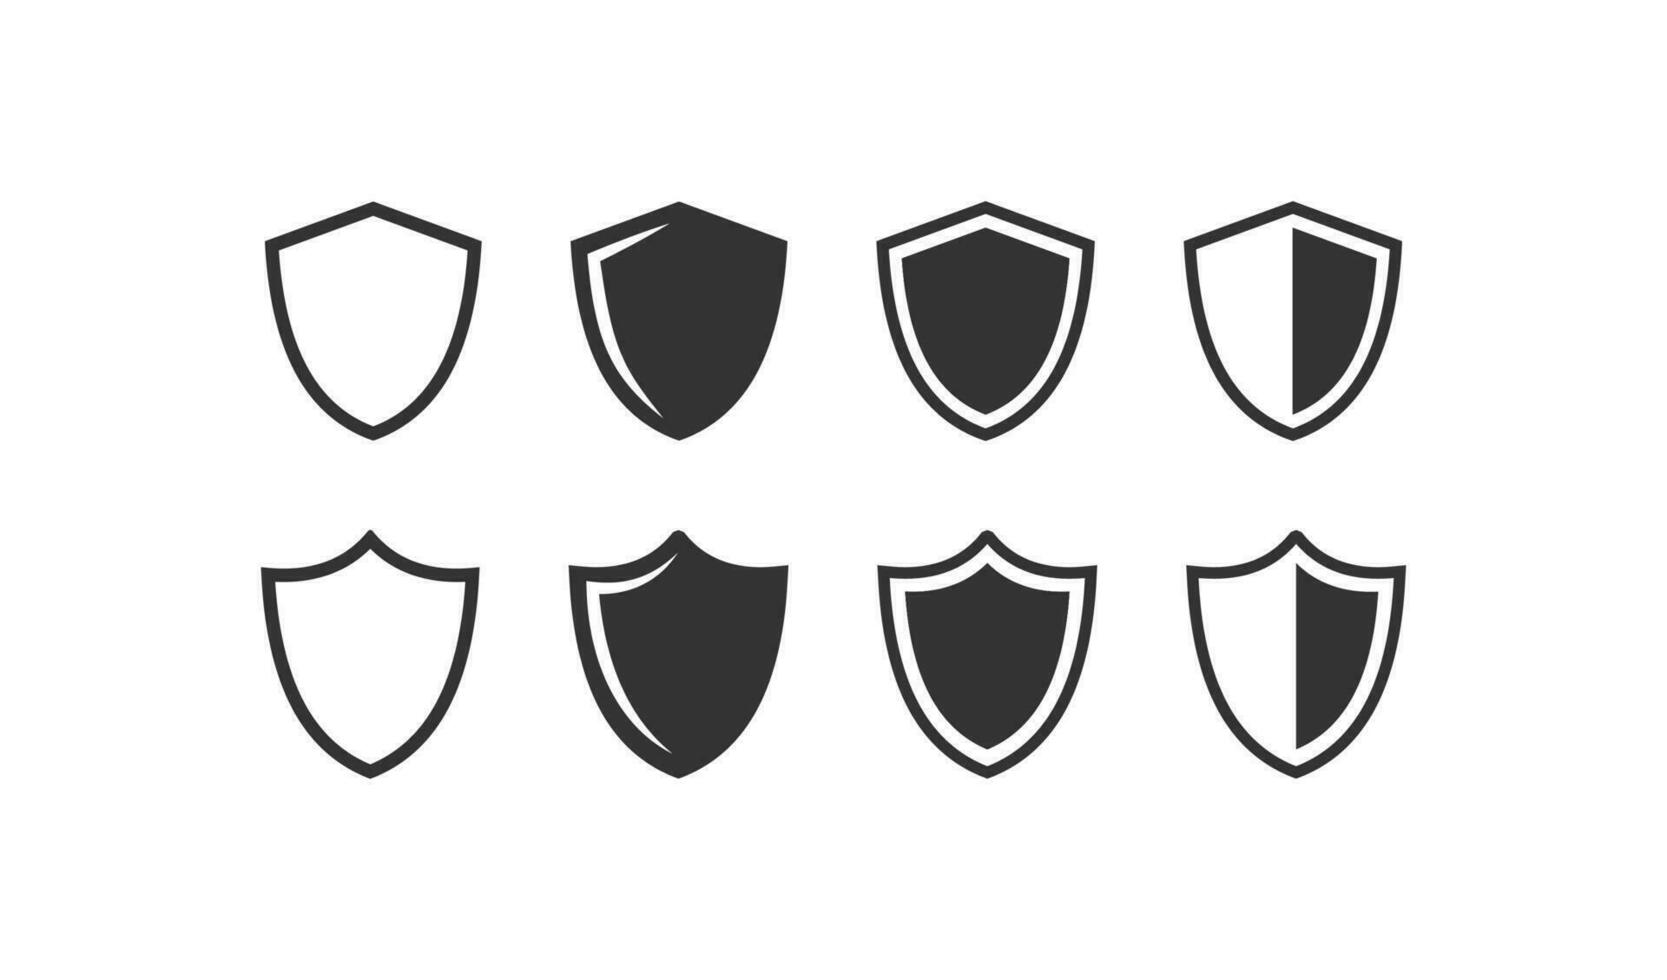 Shield icon set. Old security illustration symbol. Sign logo safety vector